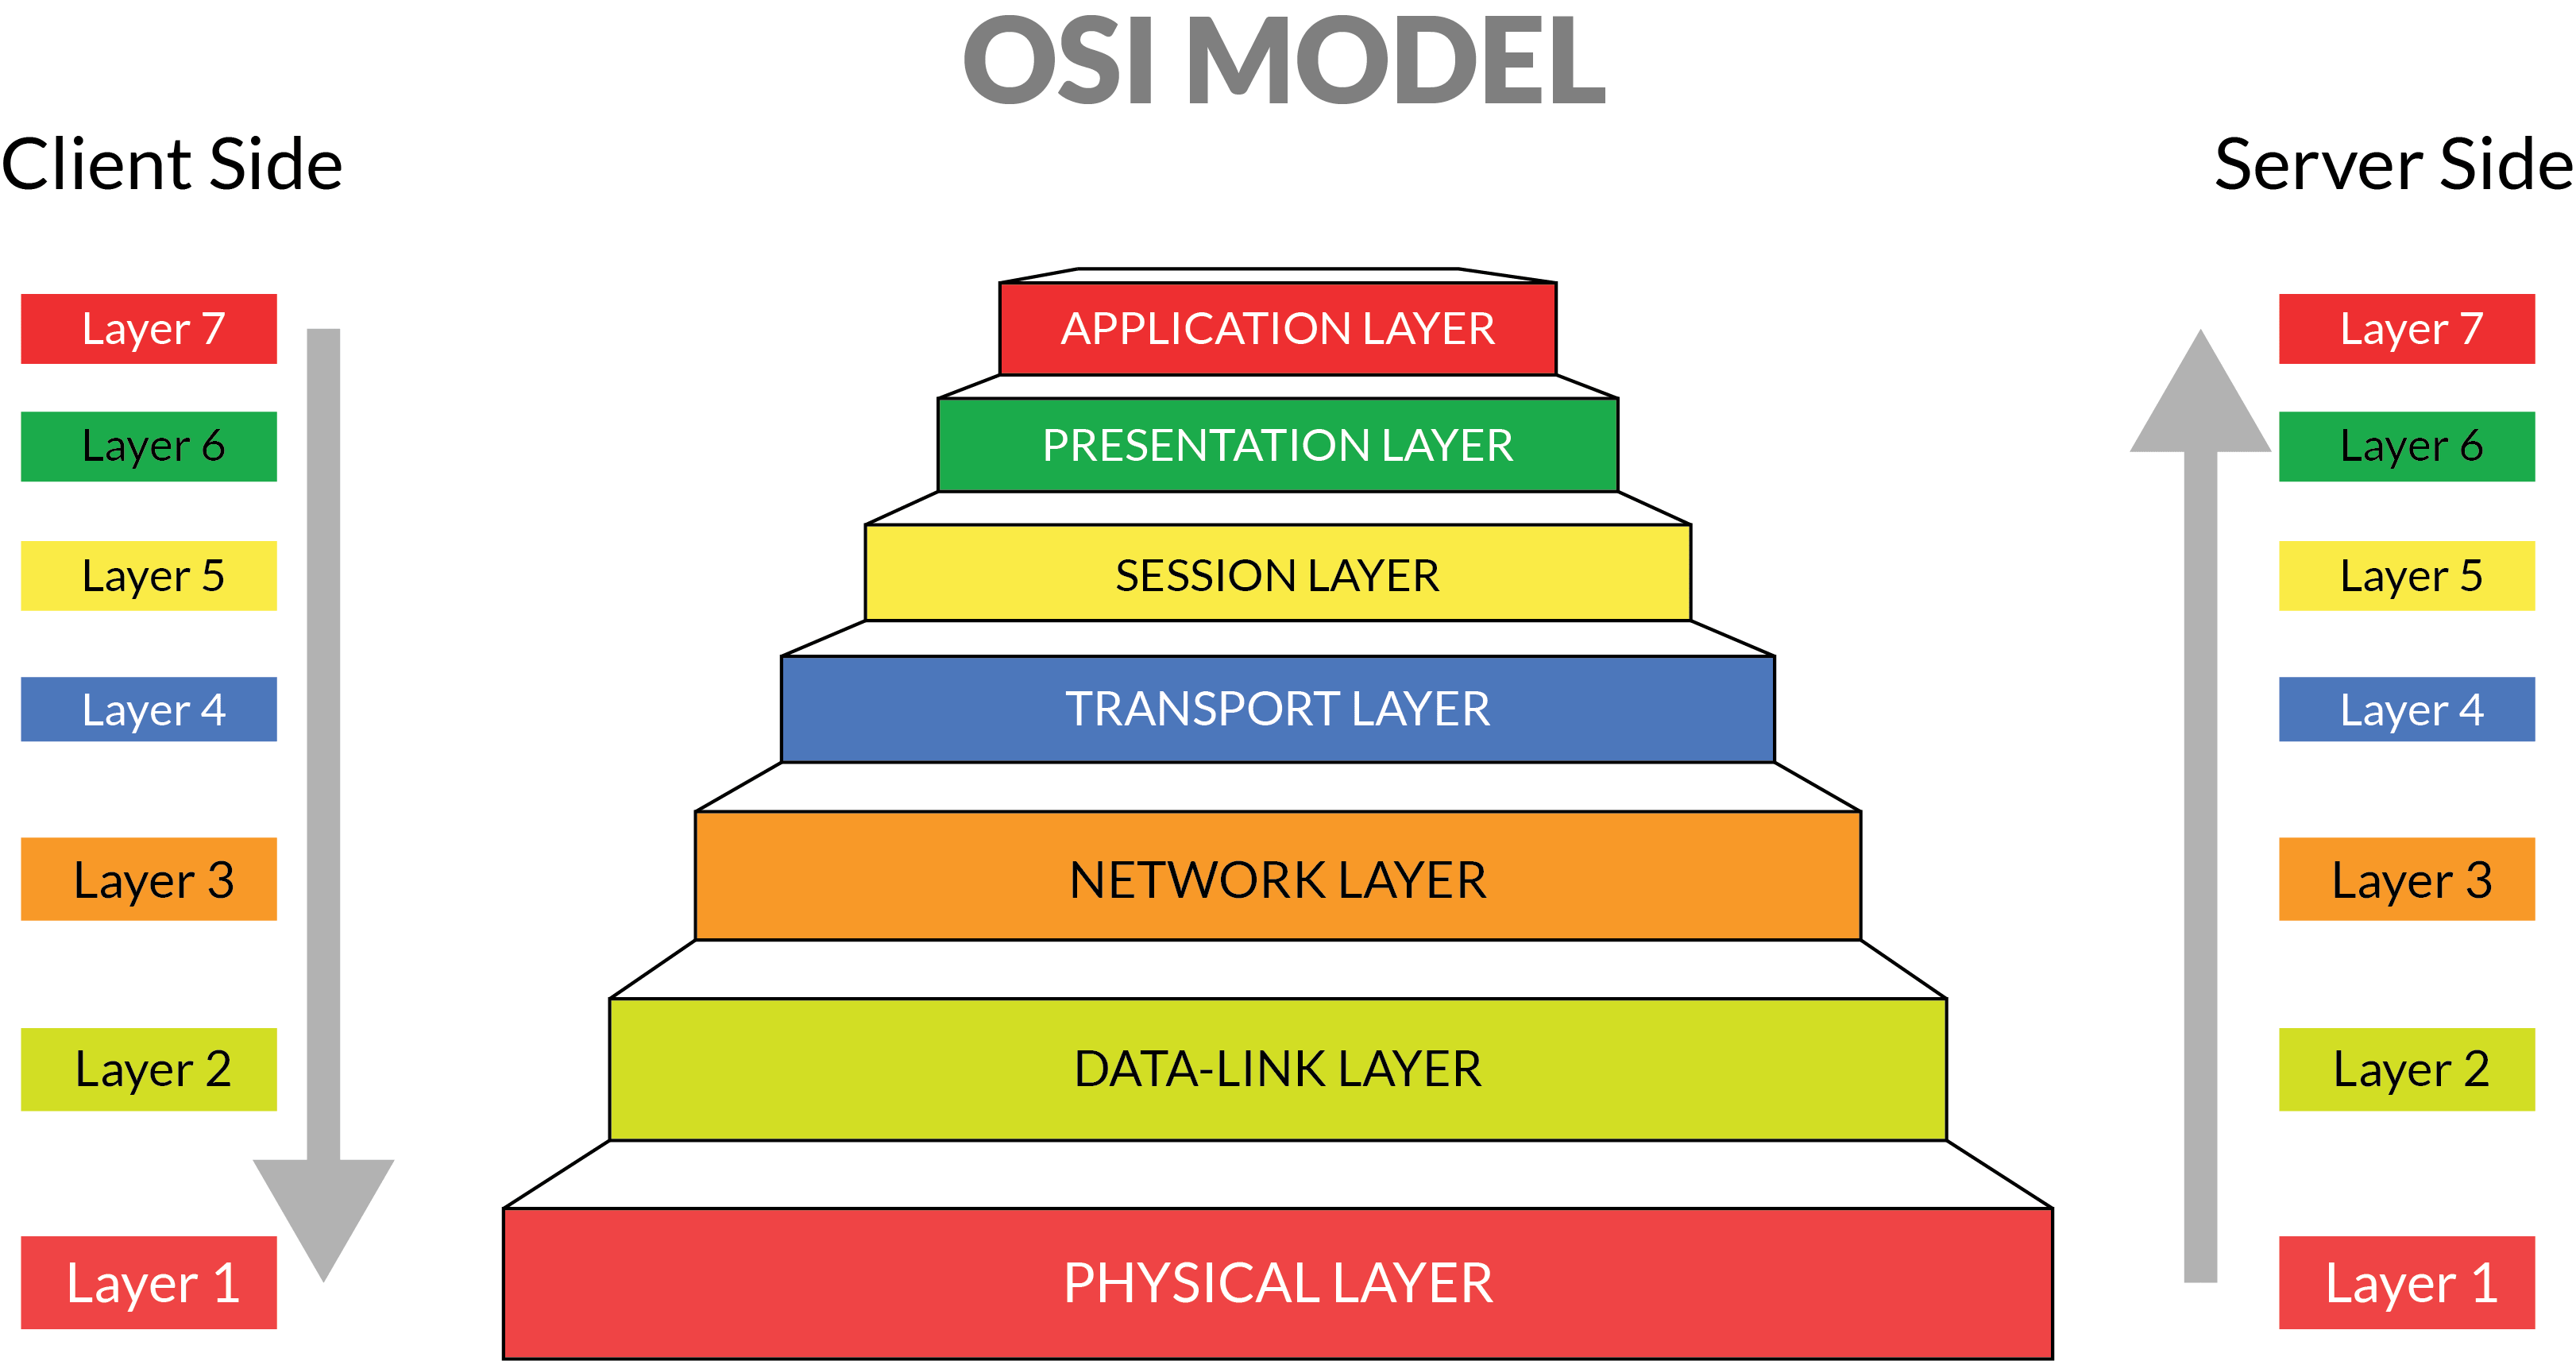 osi model assignment pdf